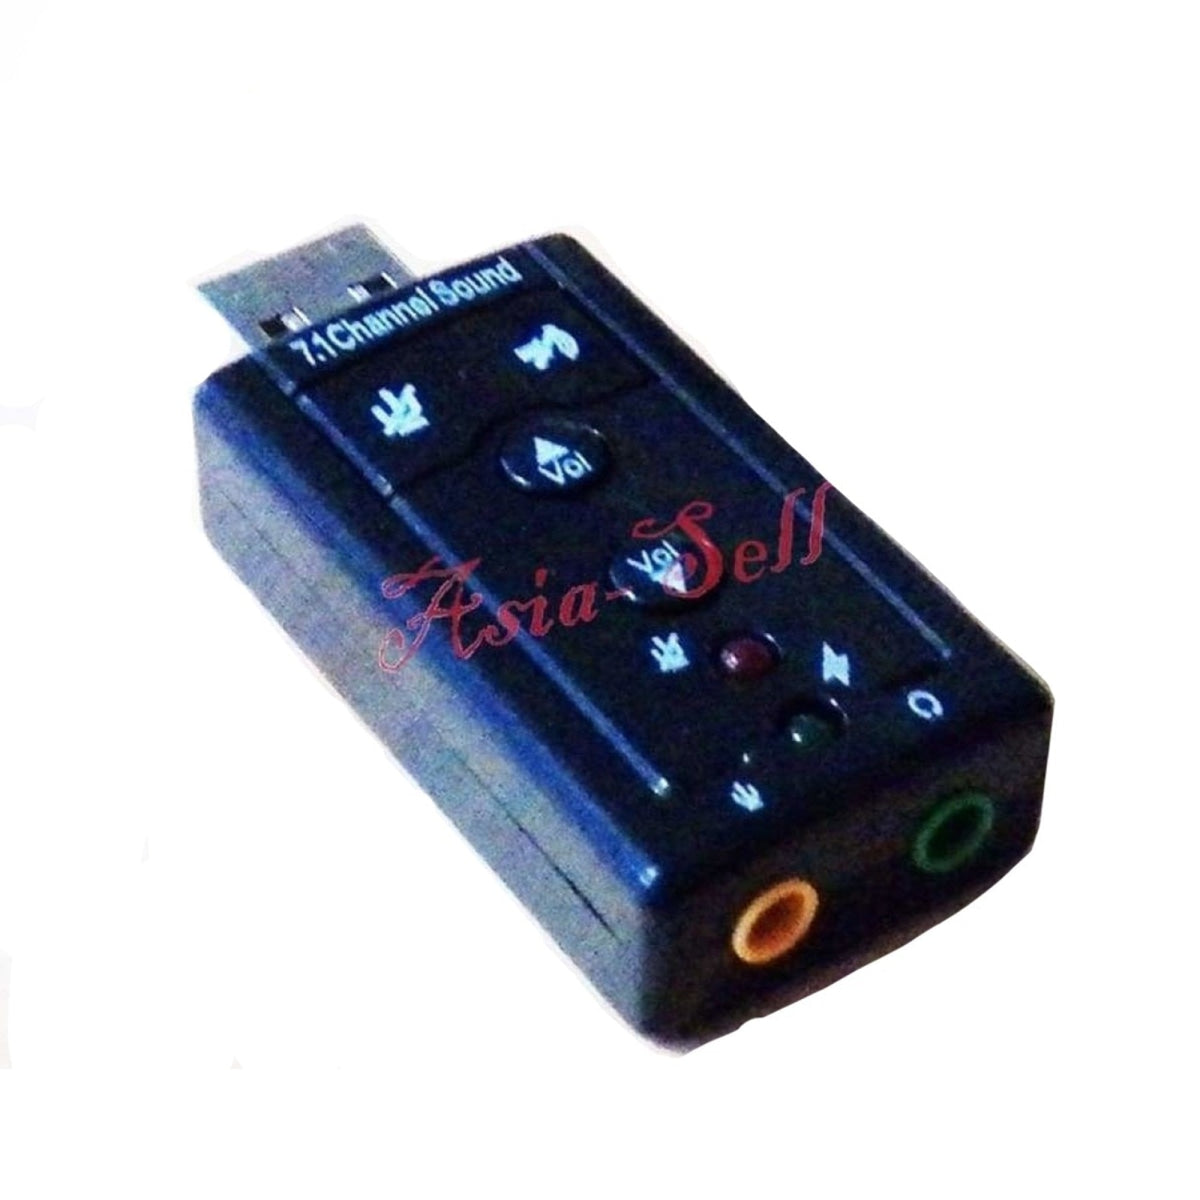 Sound Card 7.1 External Computer Usb 2.0 Audio Adaptor Speaker Microphone Driver Adaptors